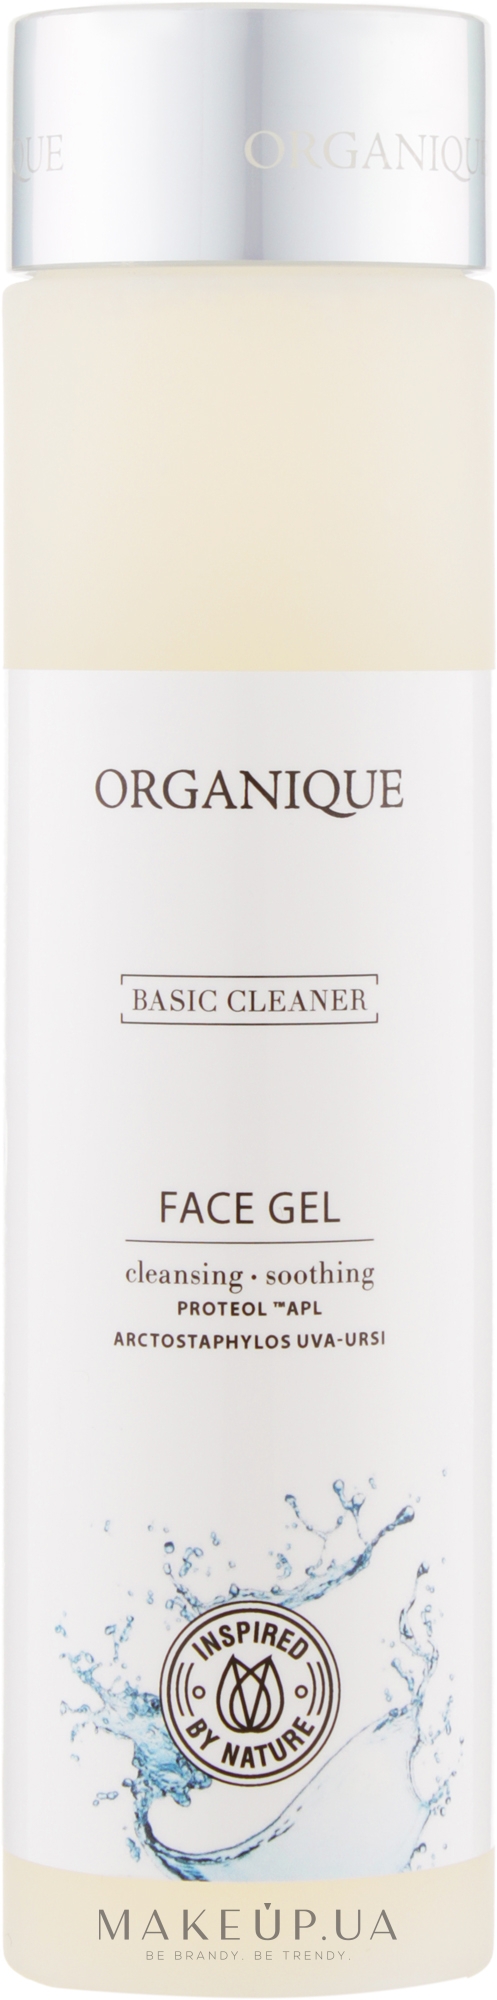 М'який очищаючий гель для обличчя - Organique Basic Cleaner Mild Cleaner Gel — фото 200ml